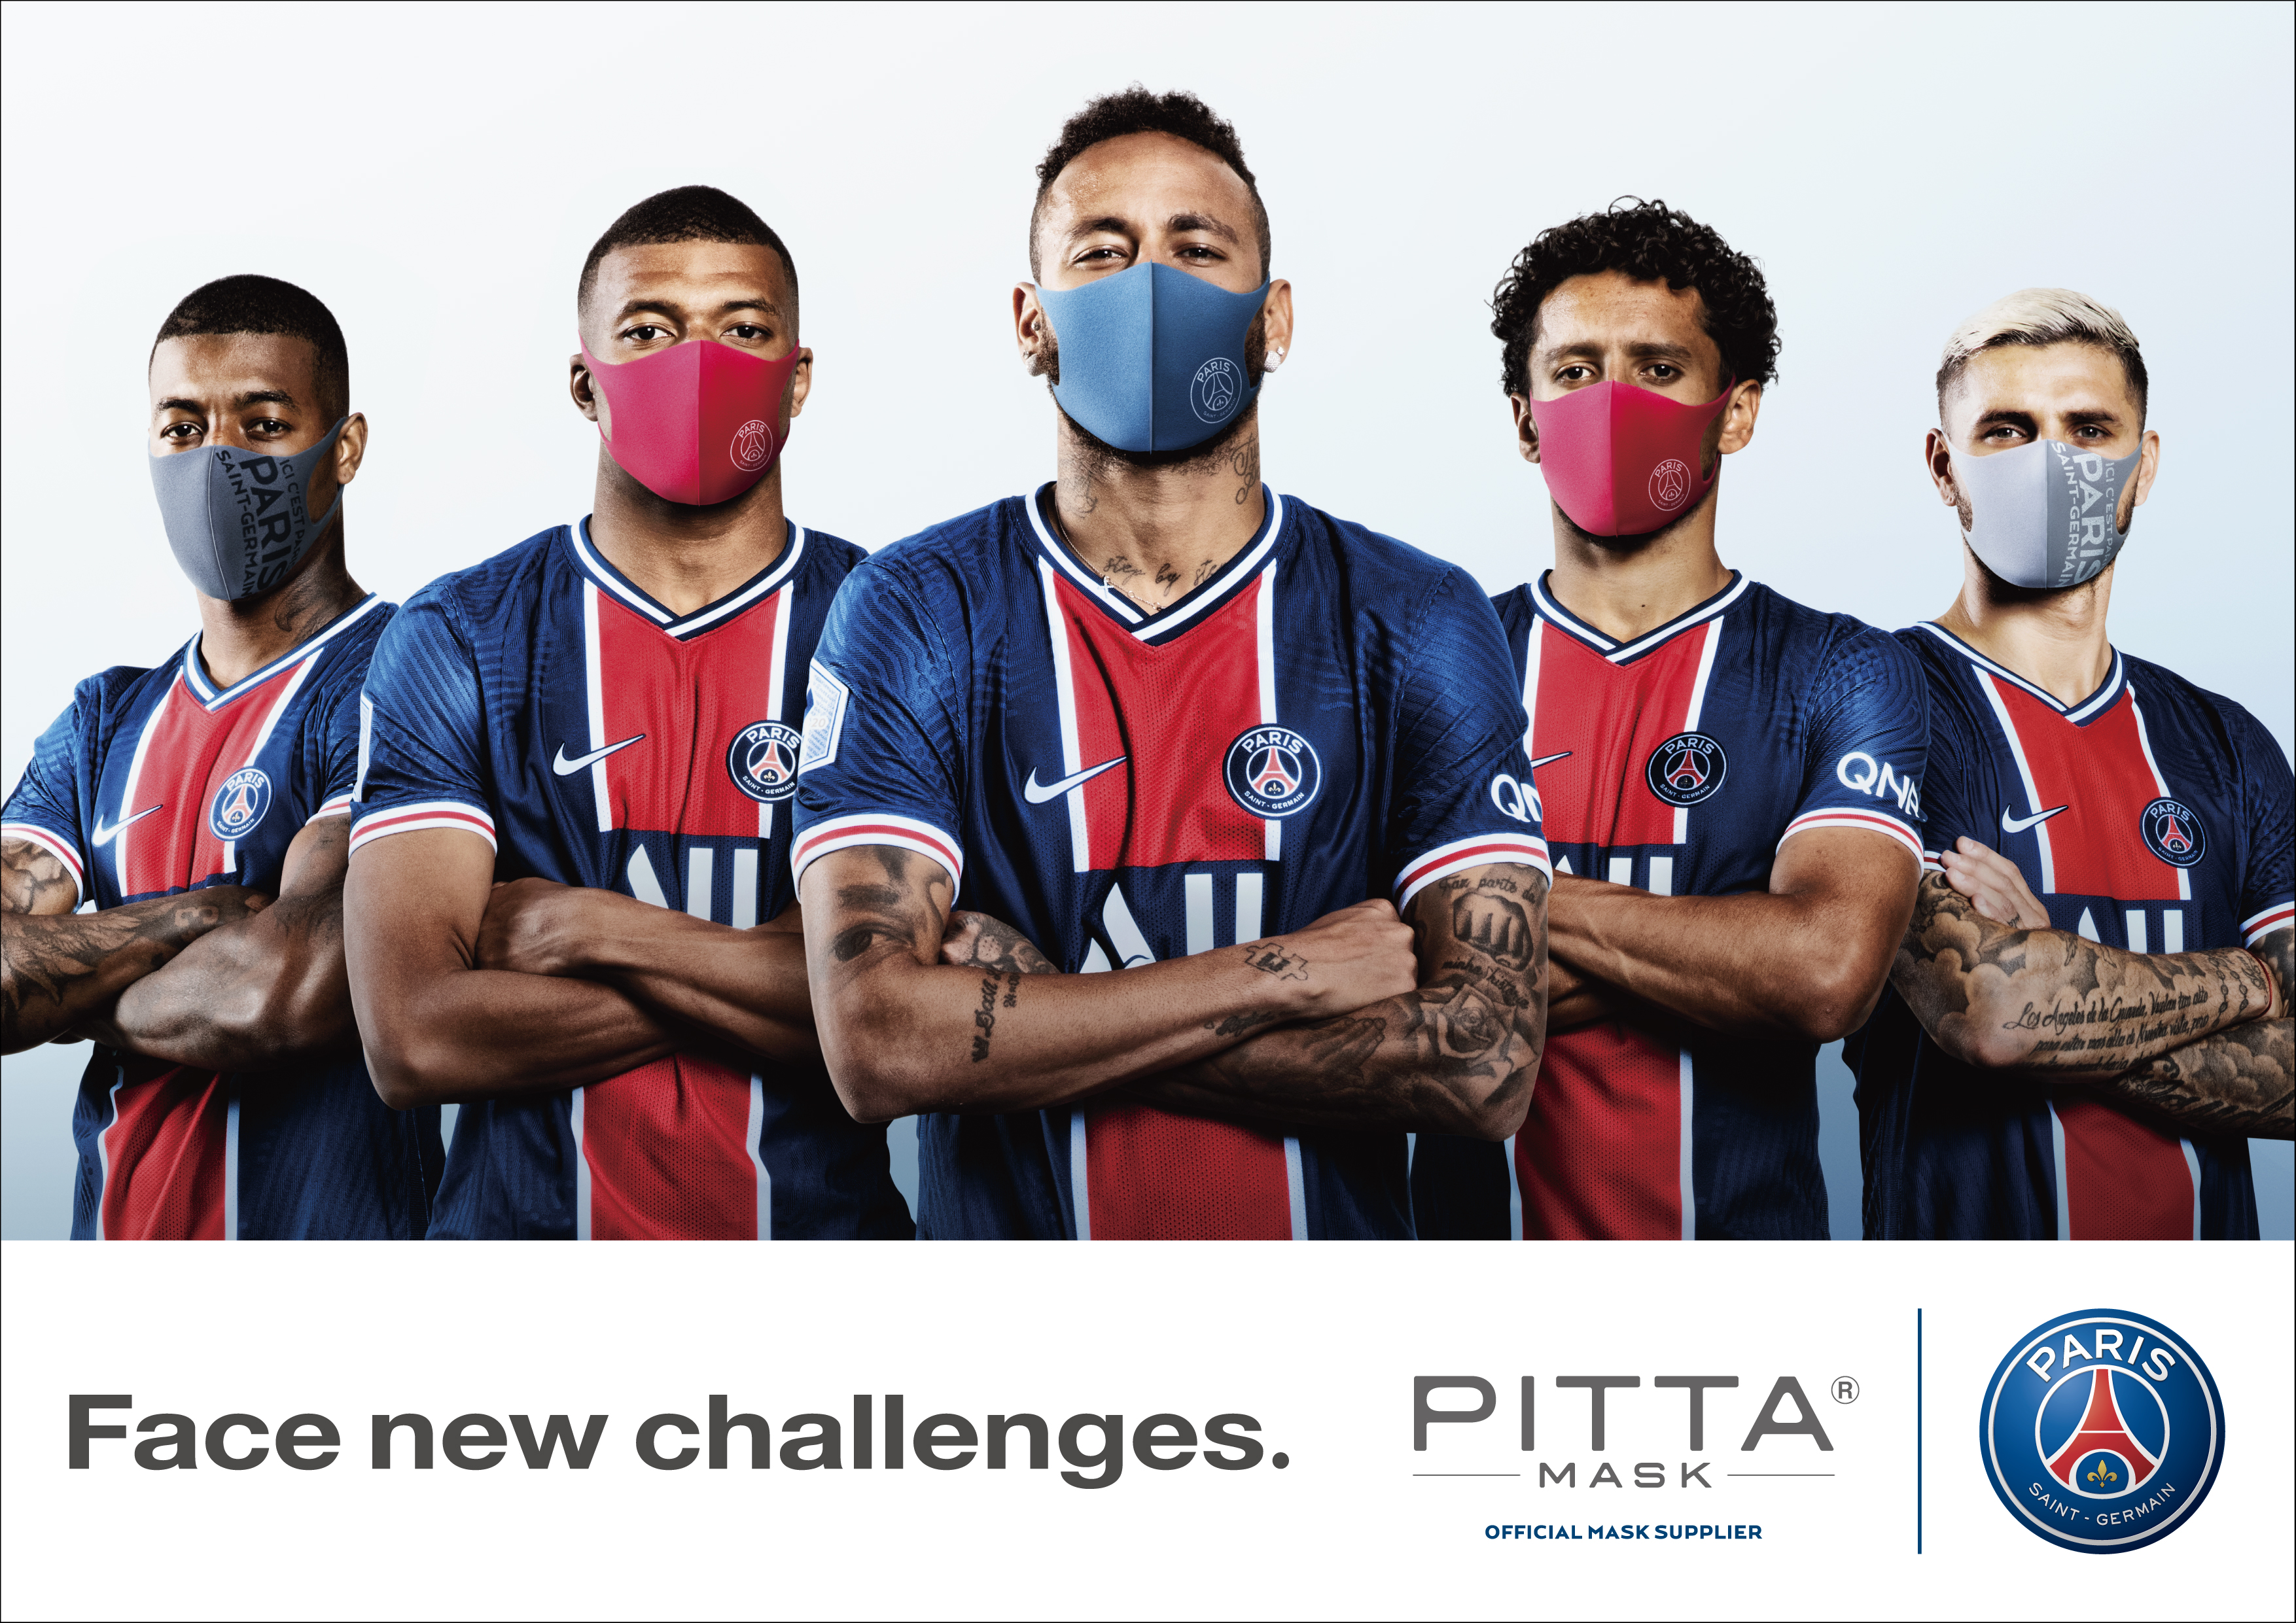 Pitta Mask パリ サン ジェルマン パートナーシップ契約を発表 オフィシャル マスクサプライヤーとして チームをサポート 株式会社アラクスのプレスリリース